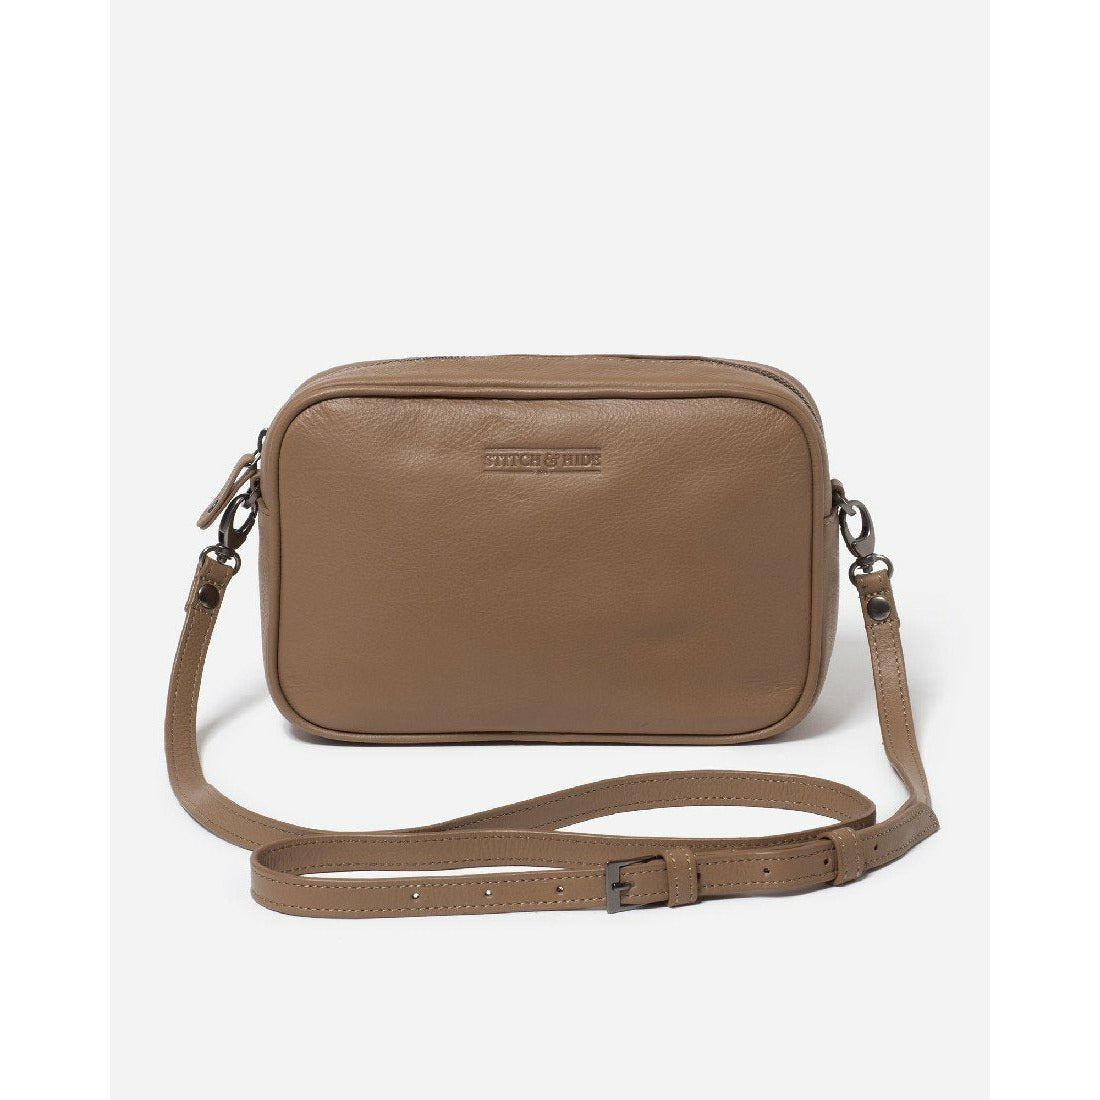 Stitch & Hide Taylor Leather Handbag